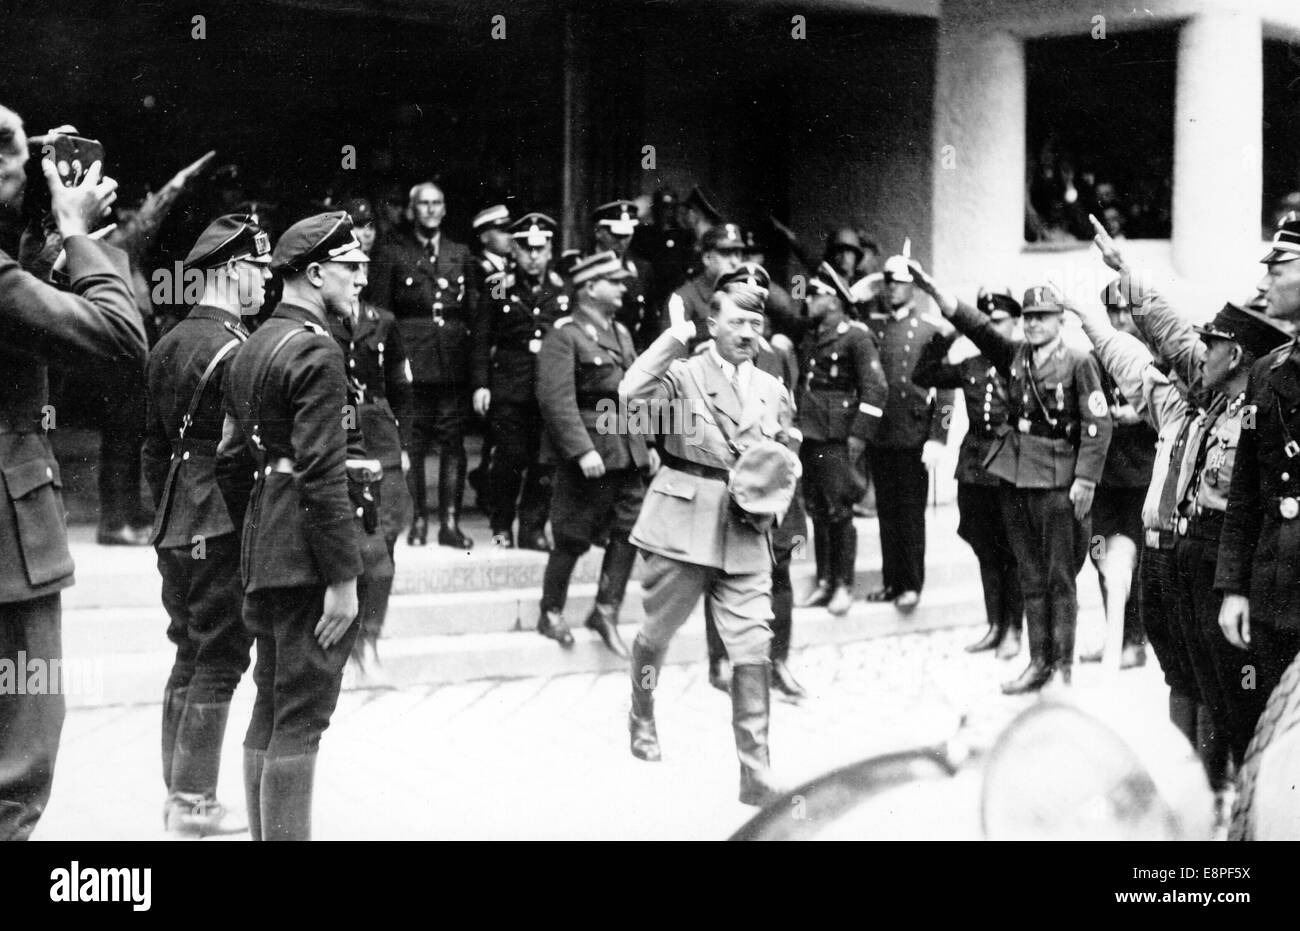 Nuremberg Rally 1933 in Nuremberg, Germany - Adolf Hitler and his ...